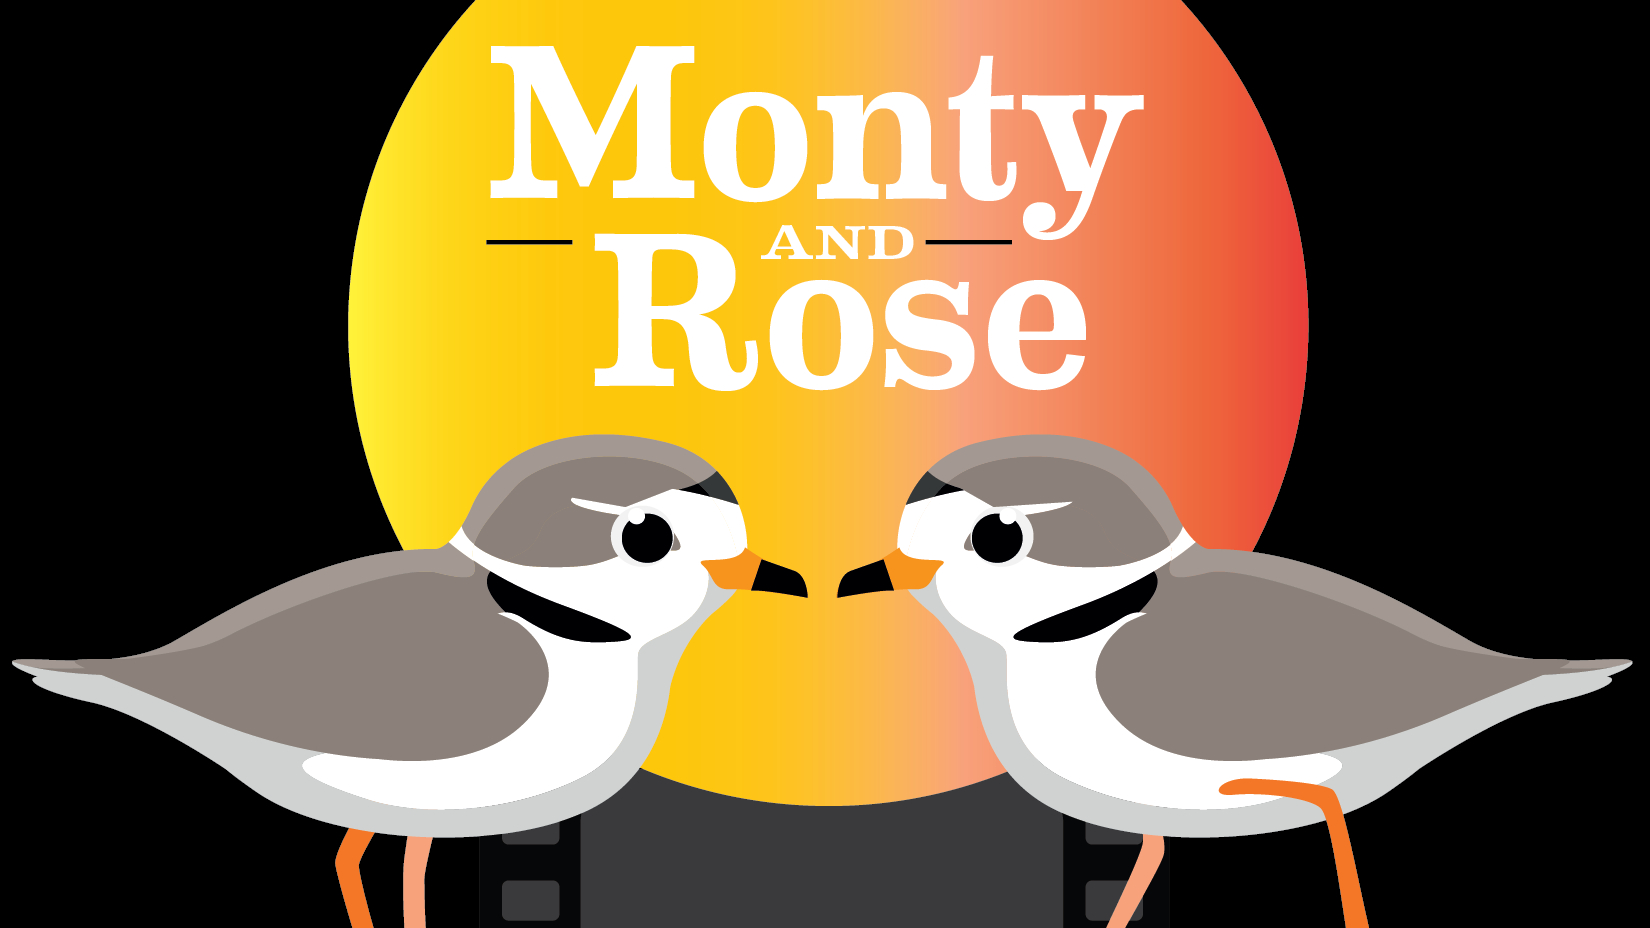 (Monty and Rose / Facebook)